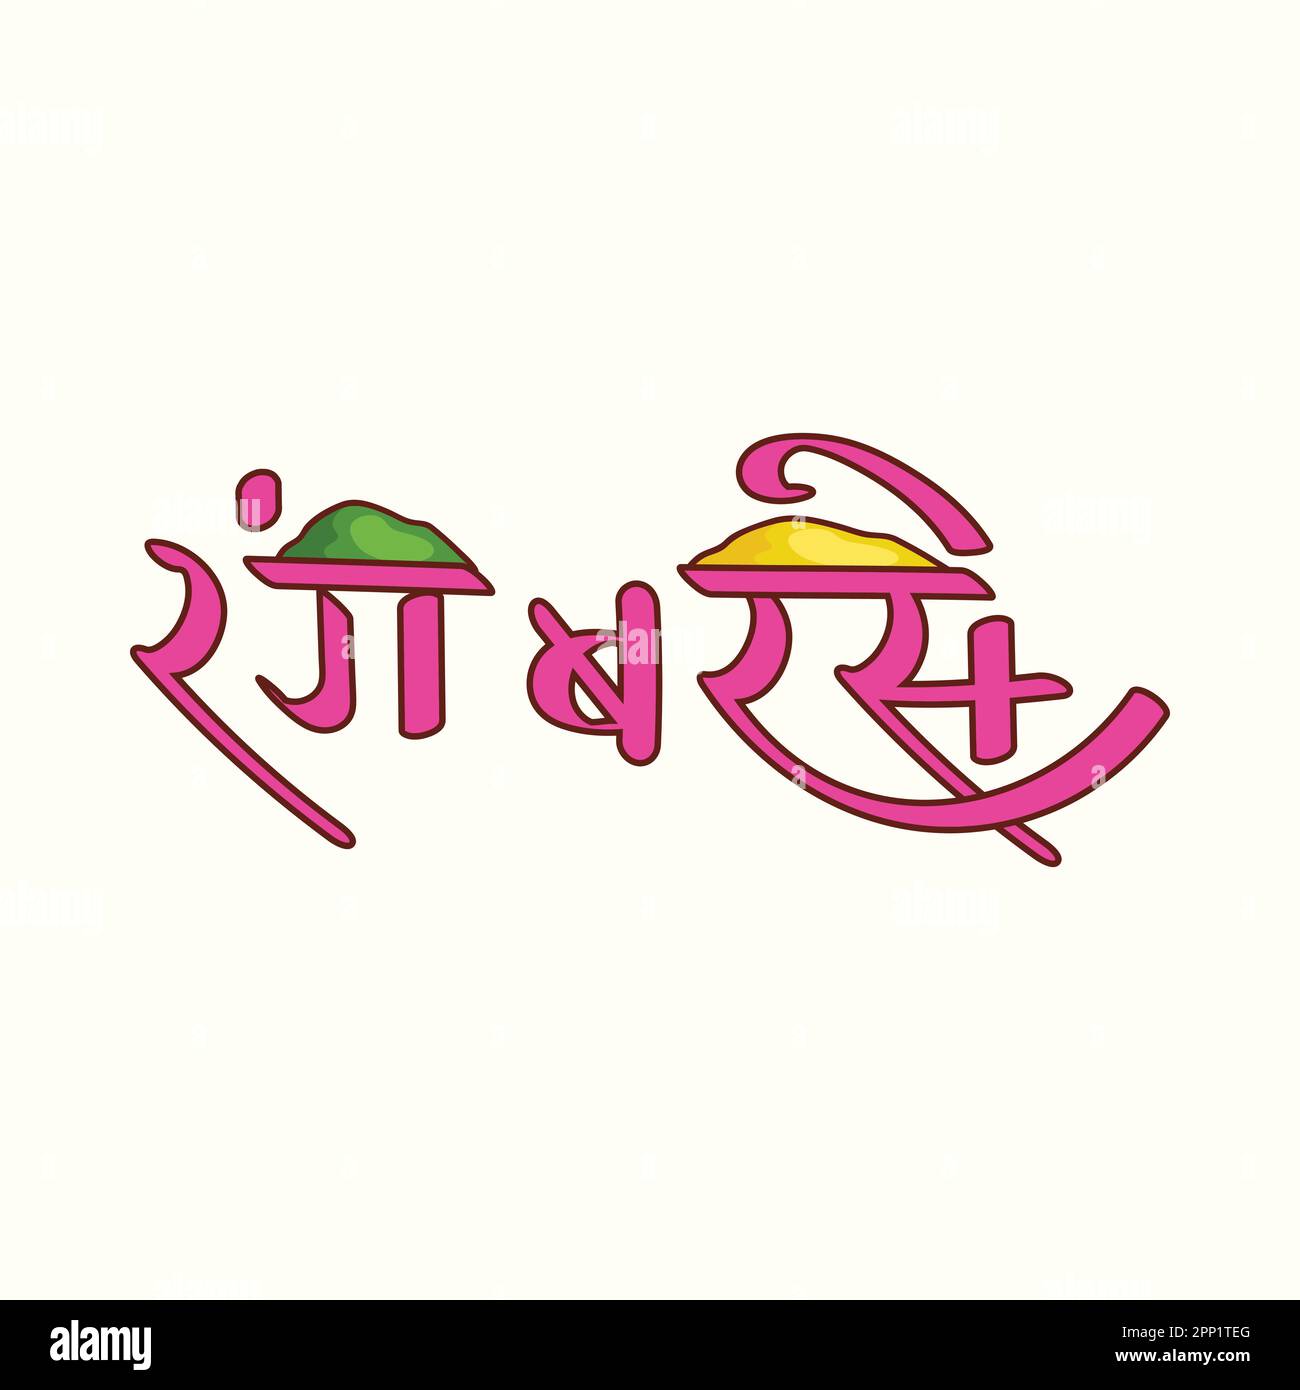 Pink Rang Barse Hindi Text Dekoriert Mit Grünem Und Gelbem Gulal (Trockene Farbe) Teller . Stock Vektor